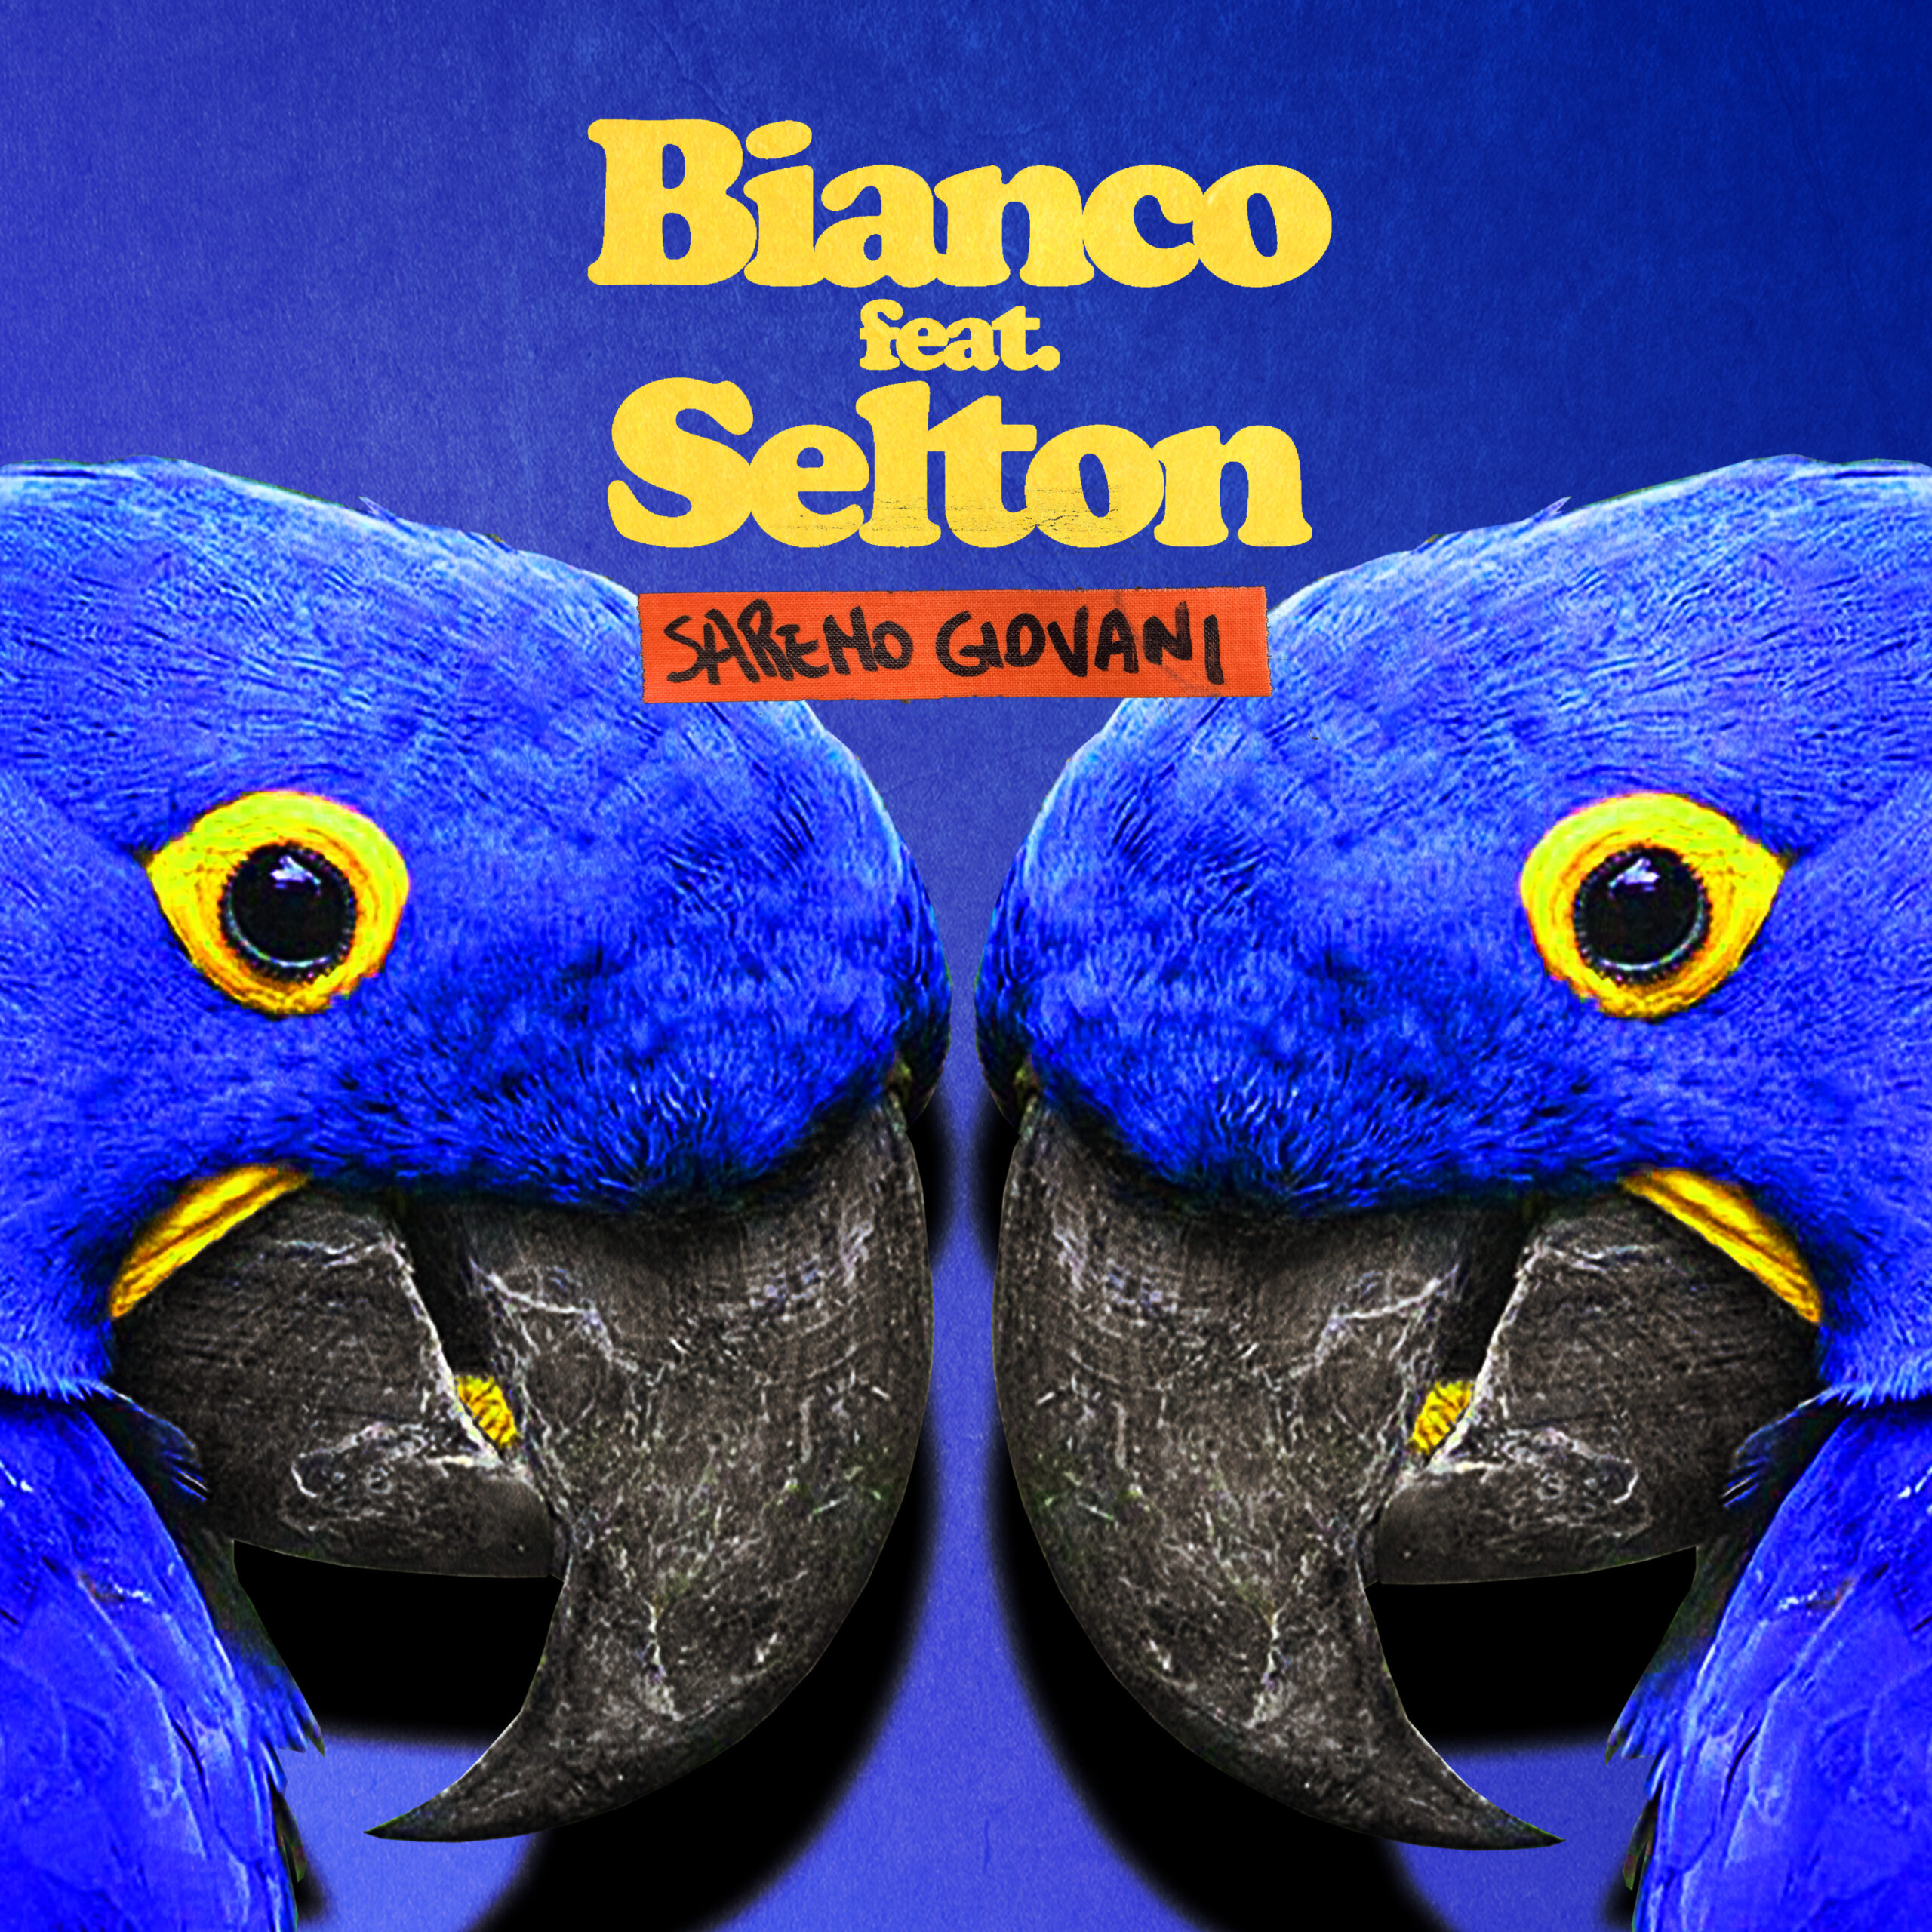 Bianco Feat Selton: "Saremo Giovani"